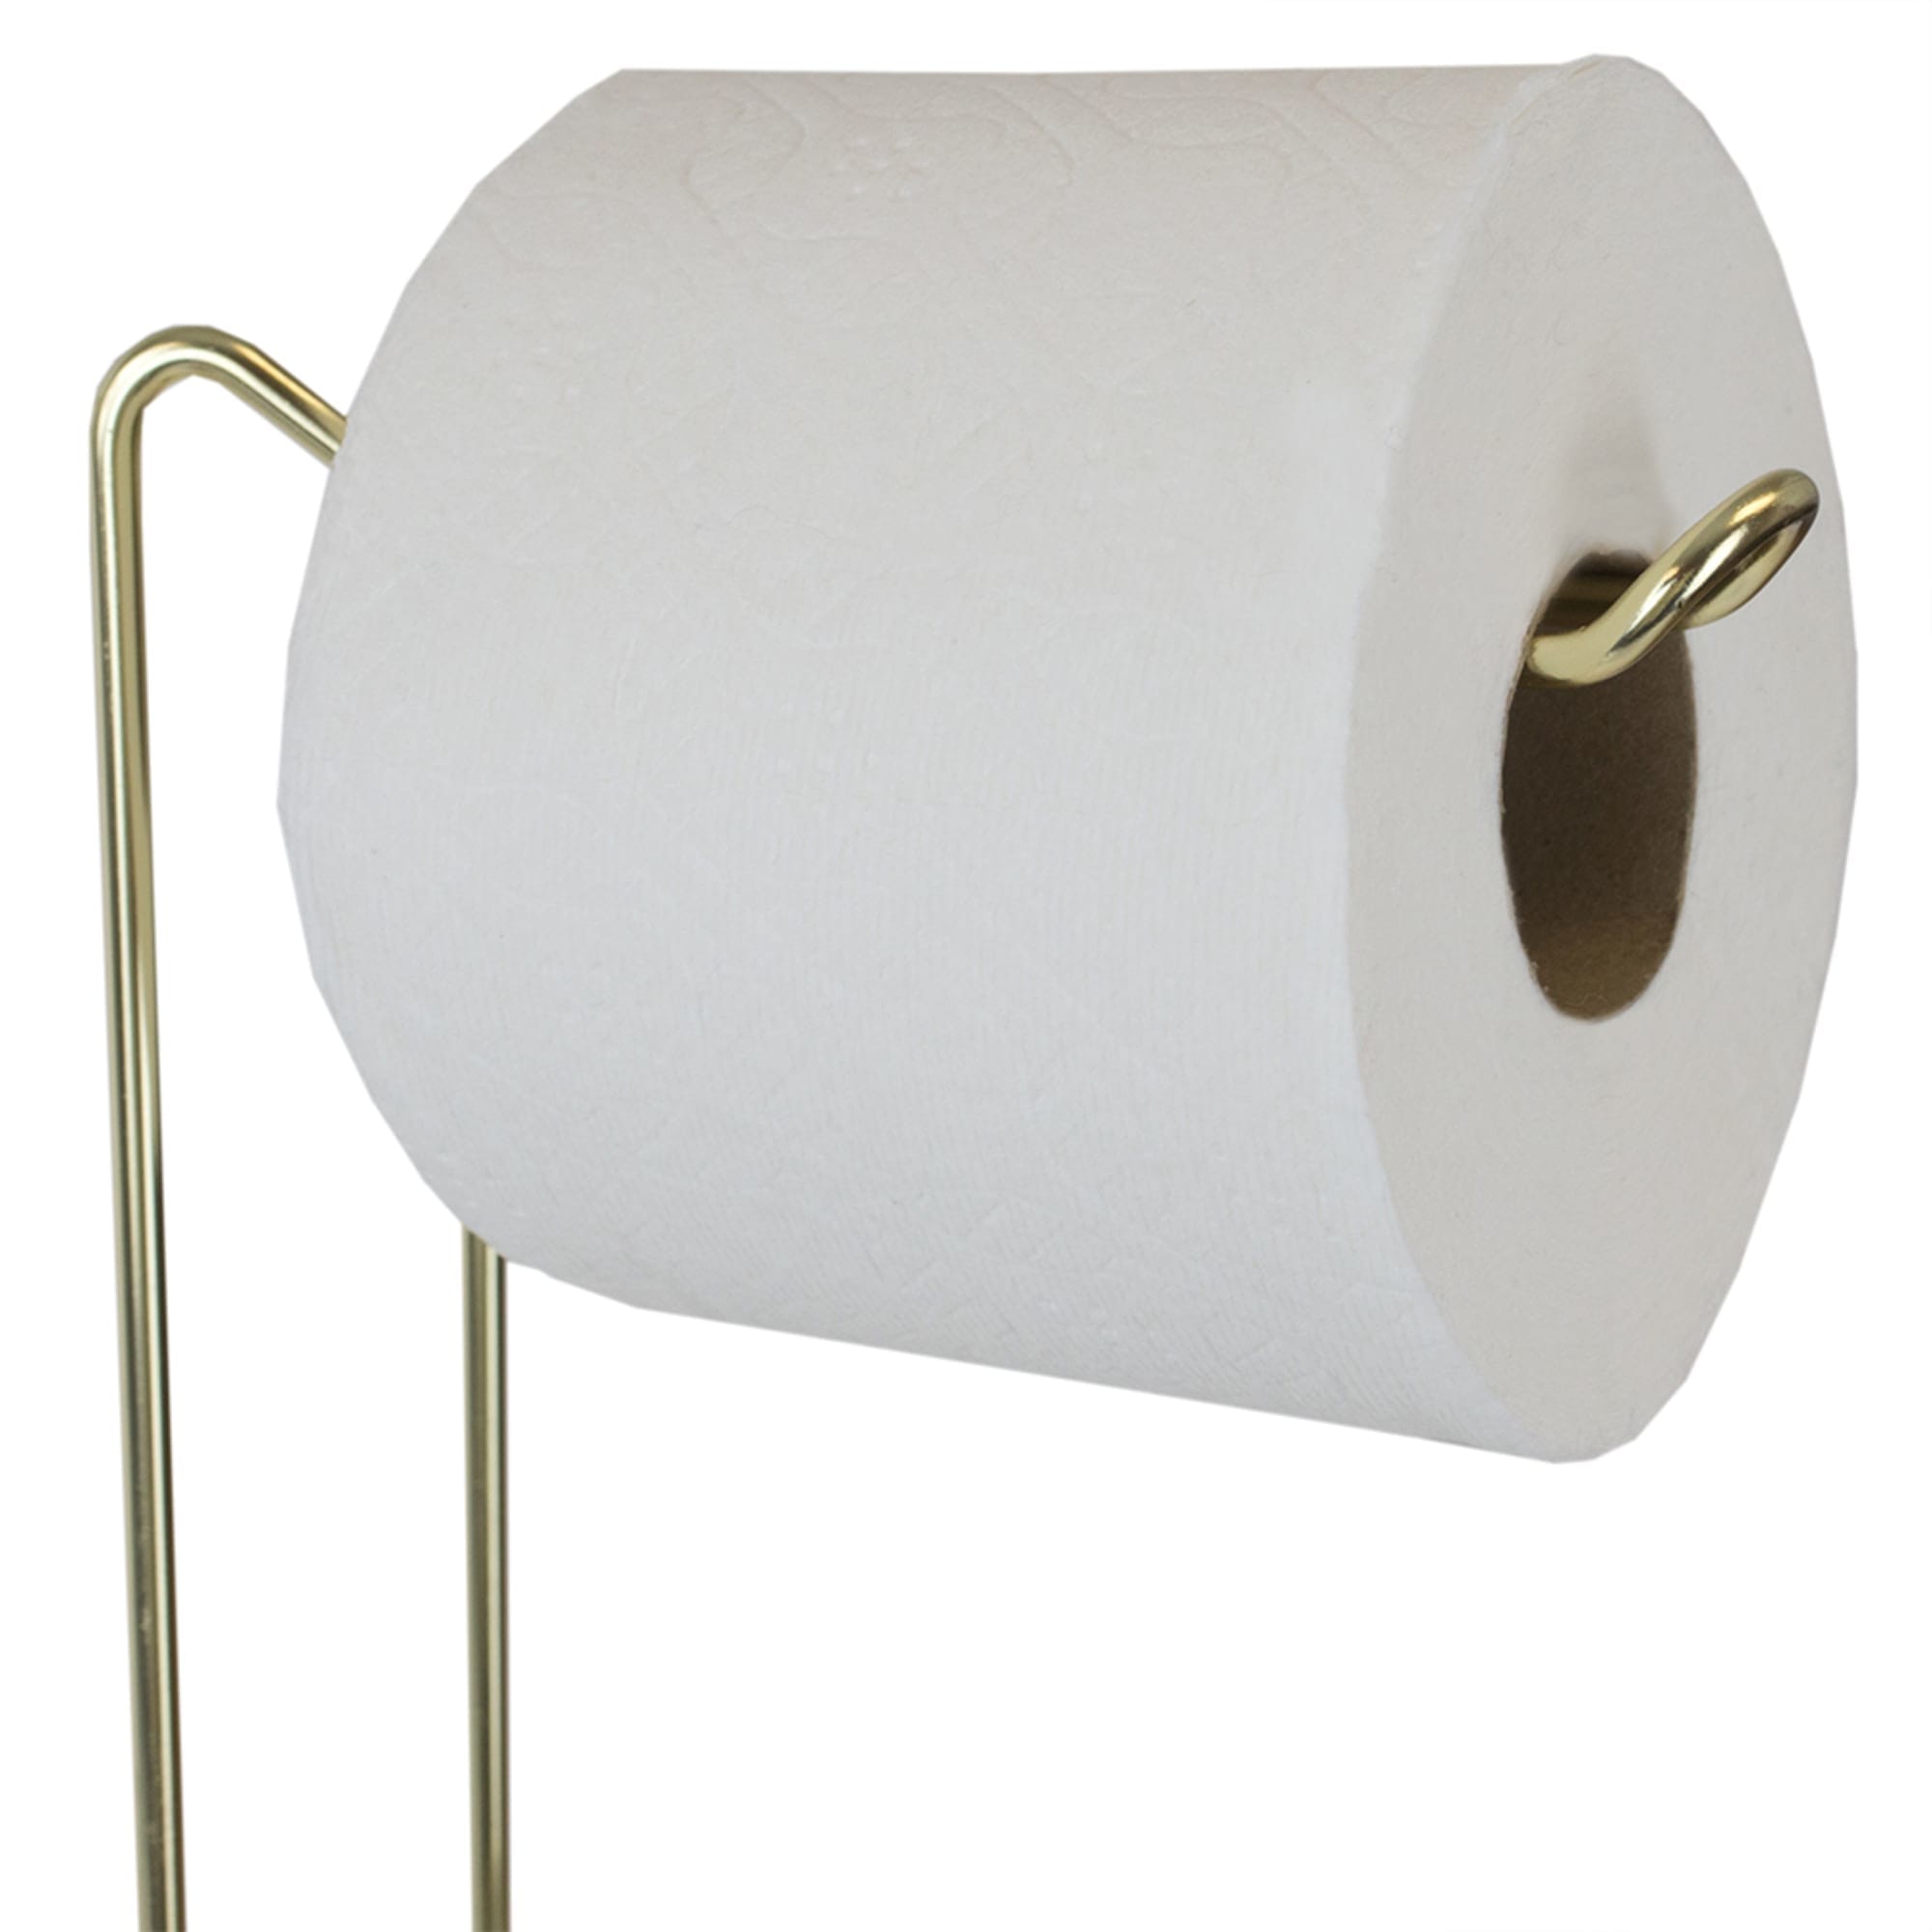 Home Basics Prism Freestanding Dispensing Toilet Paper Holder, Gold $20.00 EACH, CASE PACK OF 6